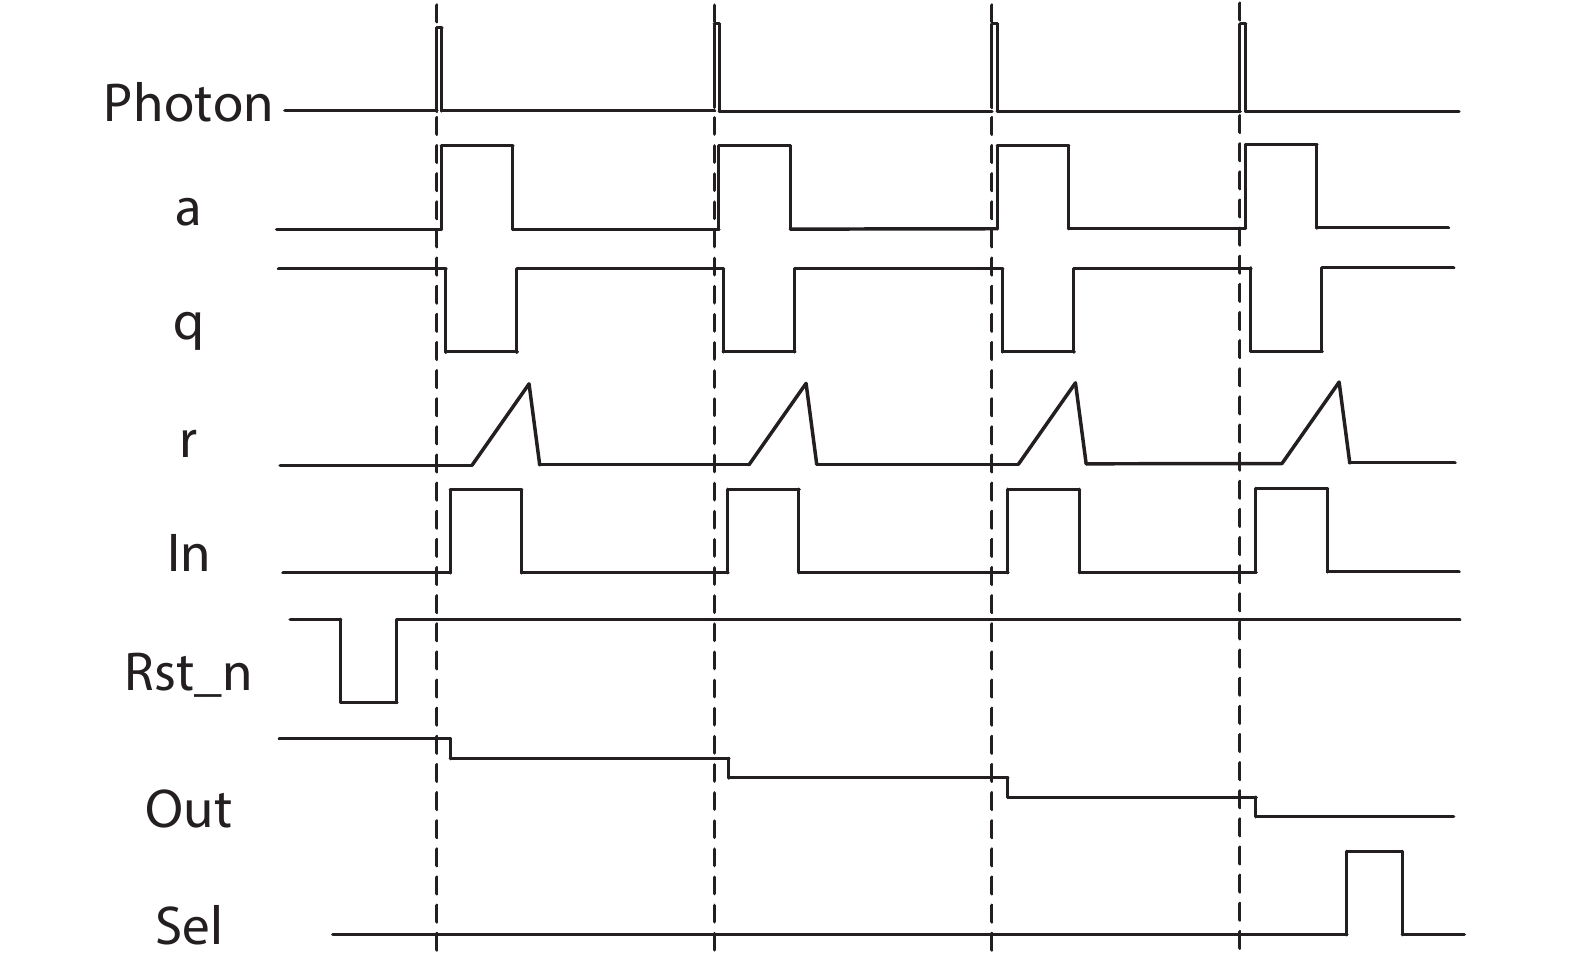 The timing diagram of pixel signals.